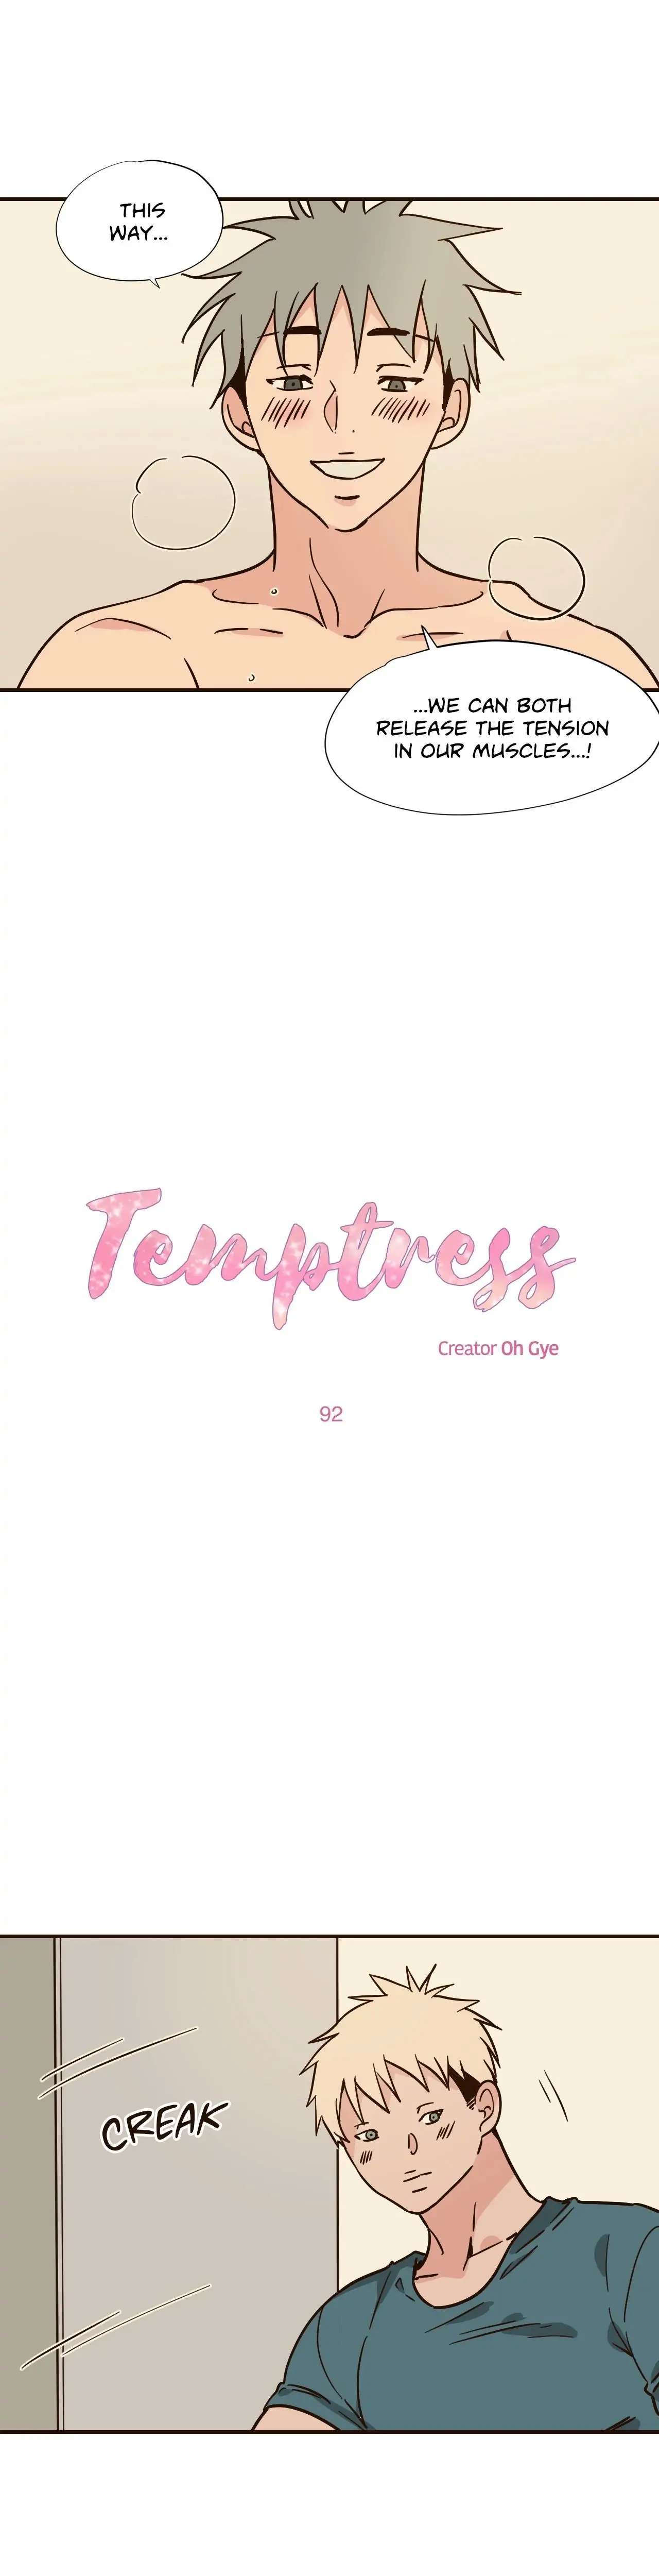 Temptress - Page 1